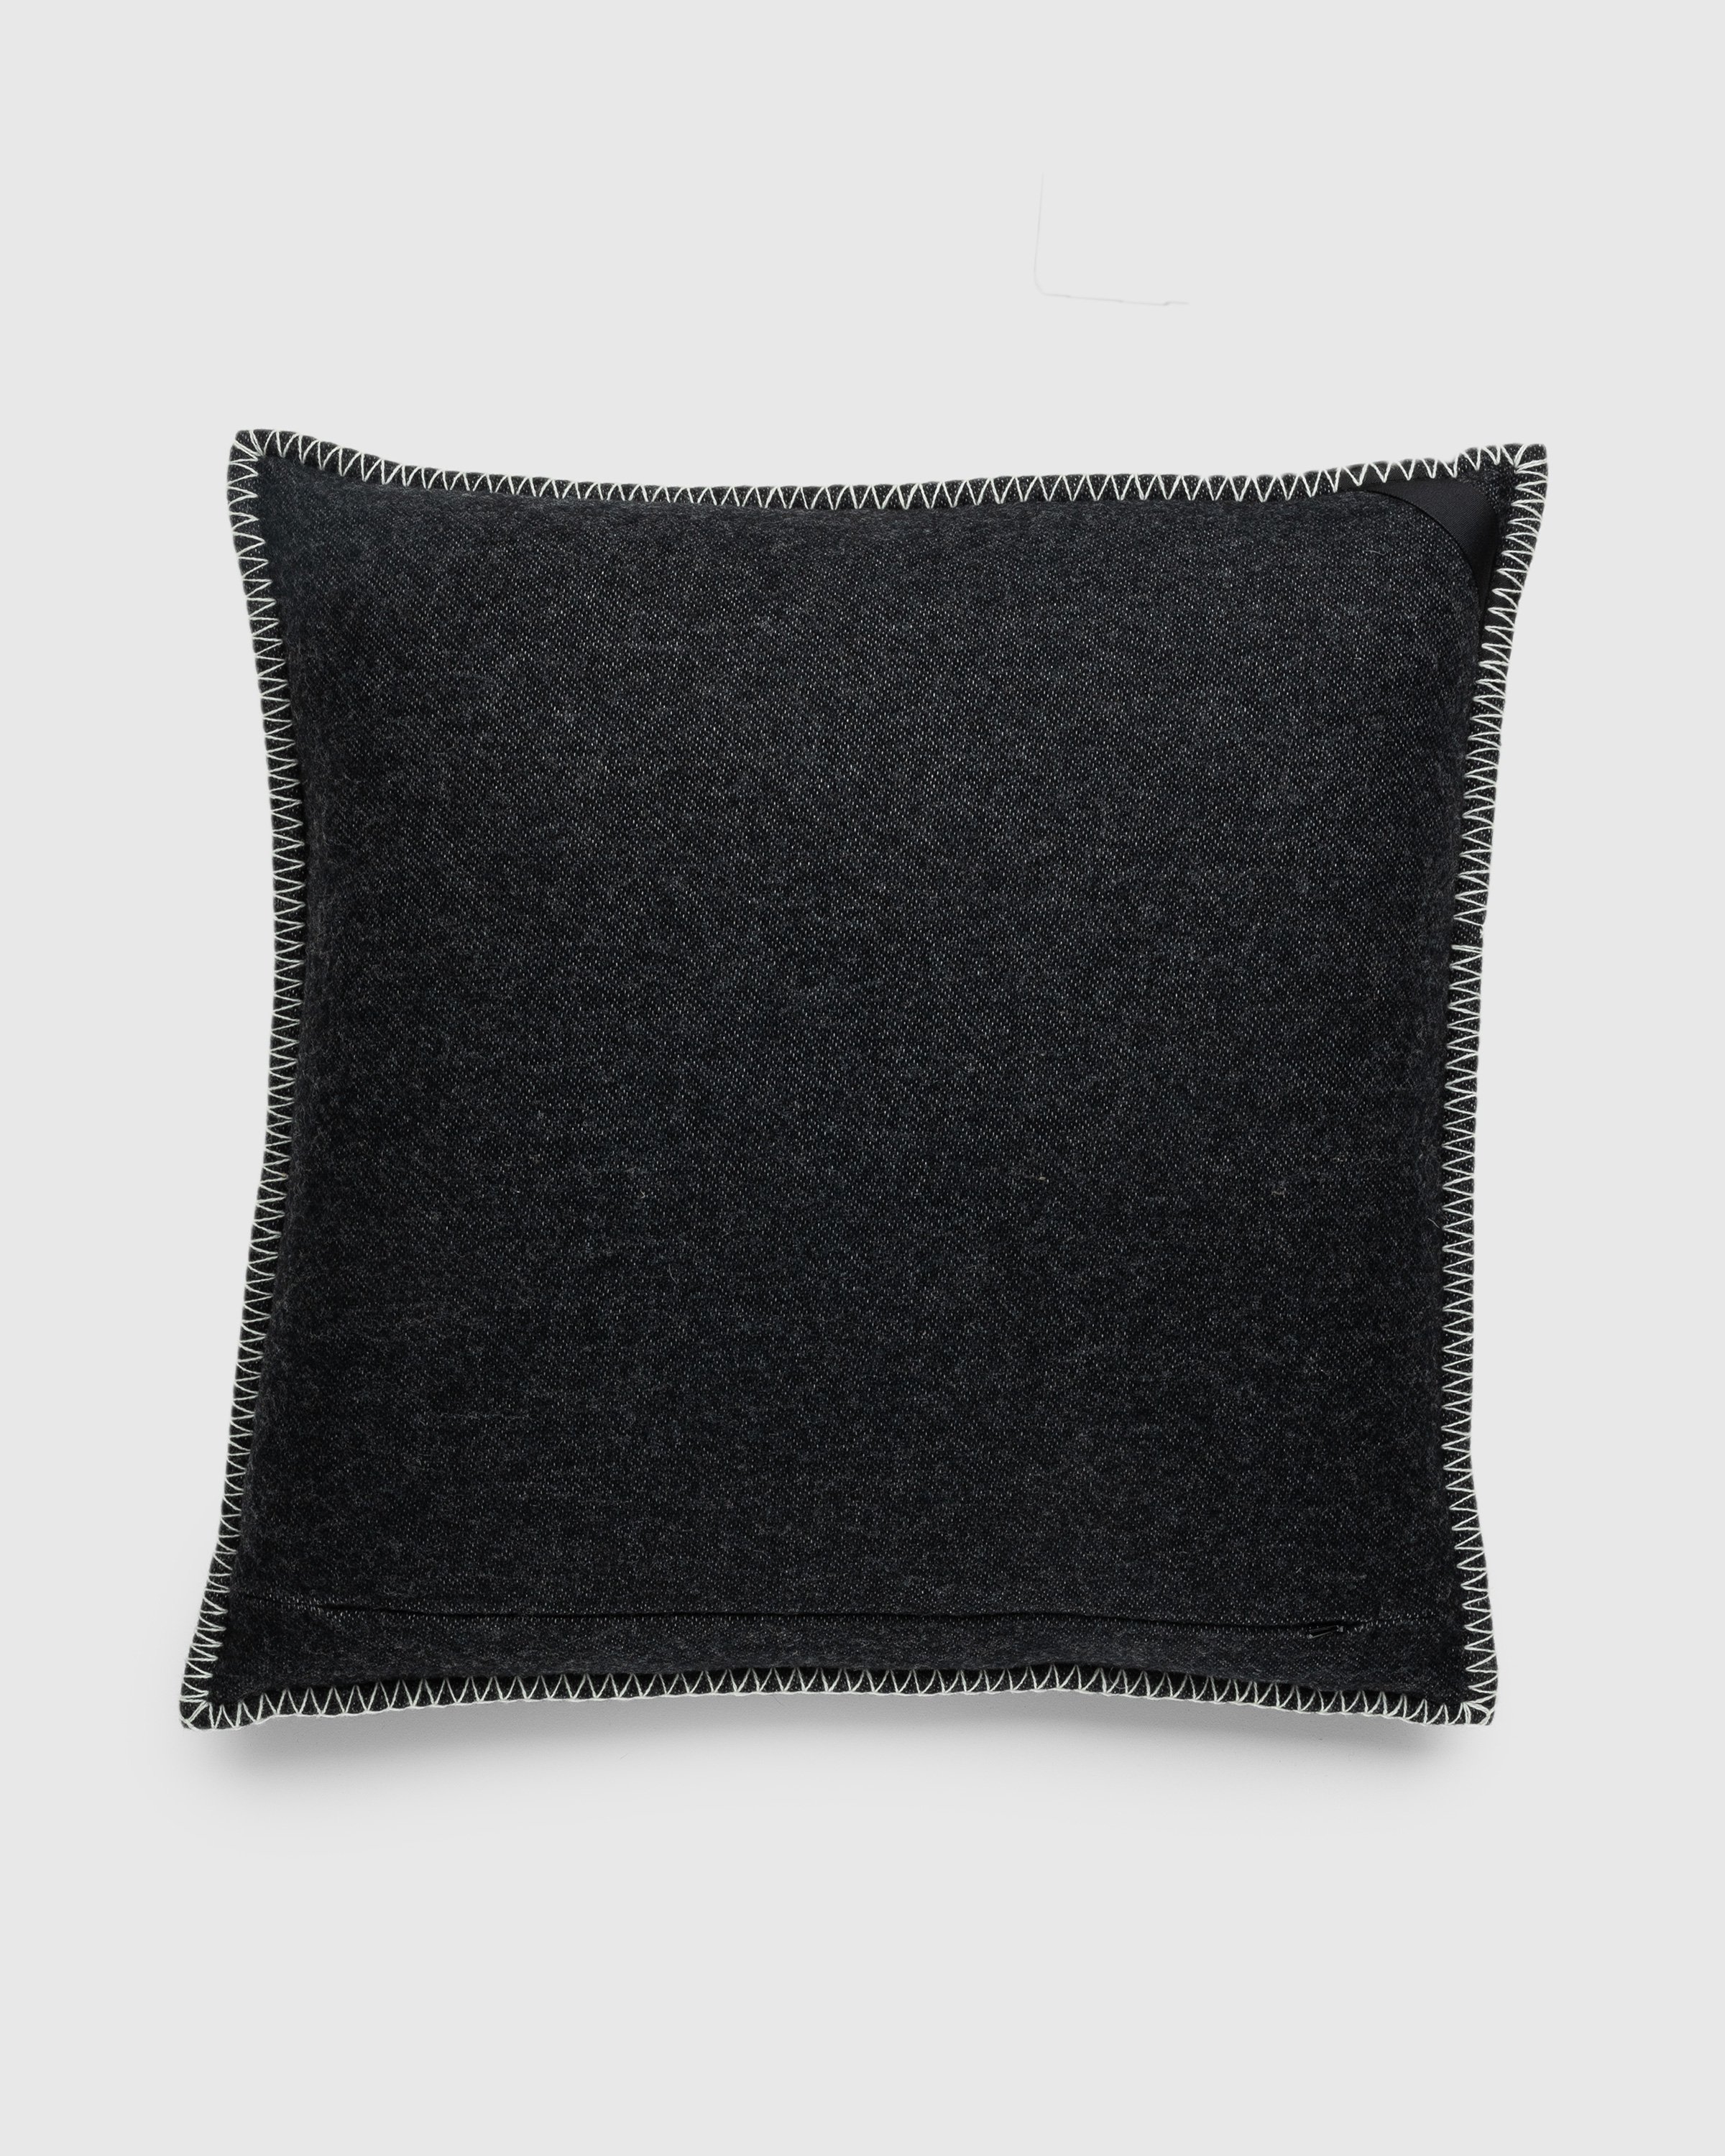 Kvadrat/Raf Simons - Lambswool Cushion Black - Lifestyle - Black - Image 2